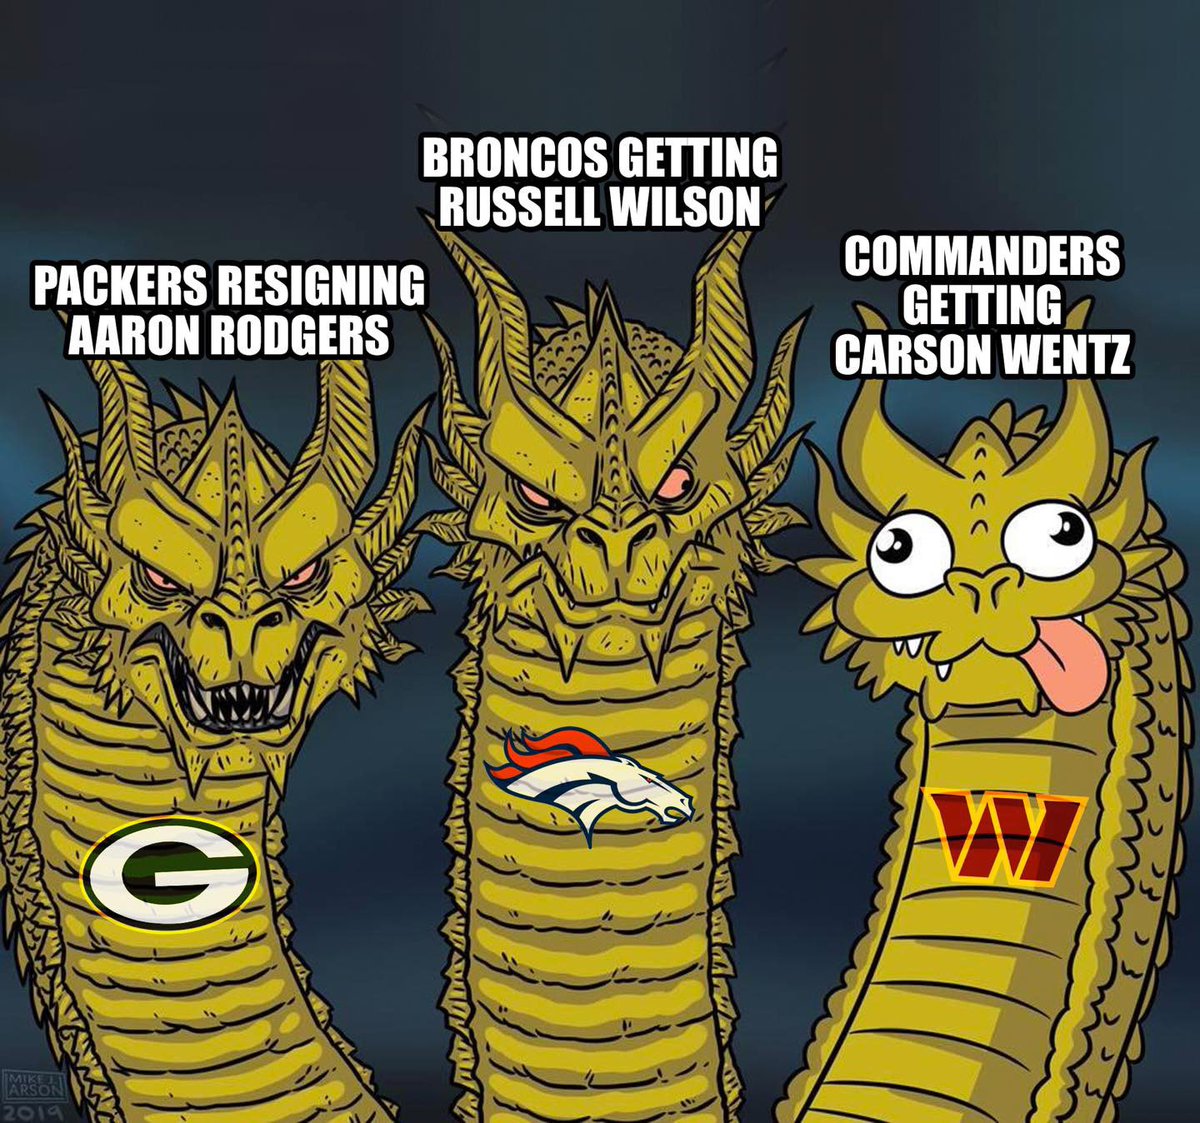 NFL Memes Preseason Roundup - carson wentz commanders meme - Packers Resigning Aaron Rodgers Mike Arson 2019 Broncos Getting Russell Wilson e Tan Commanders Getting Carson Wentz